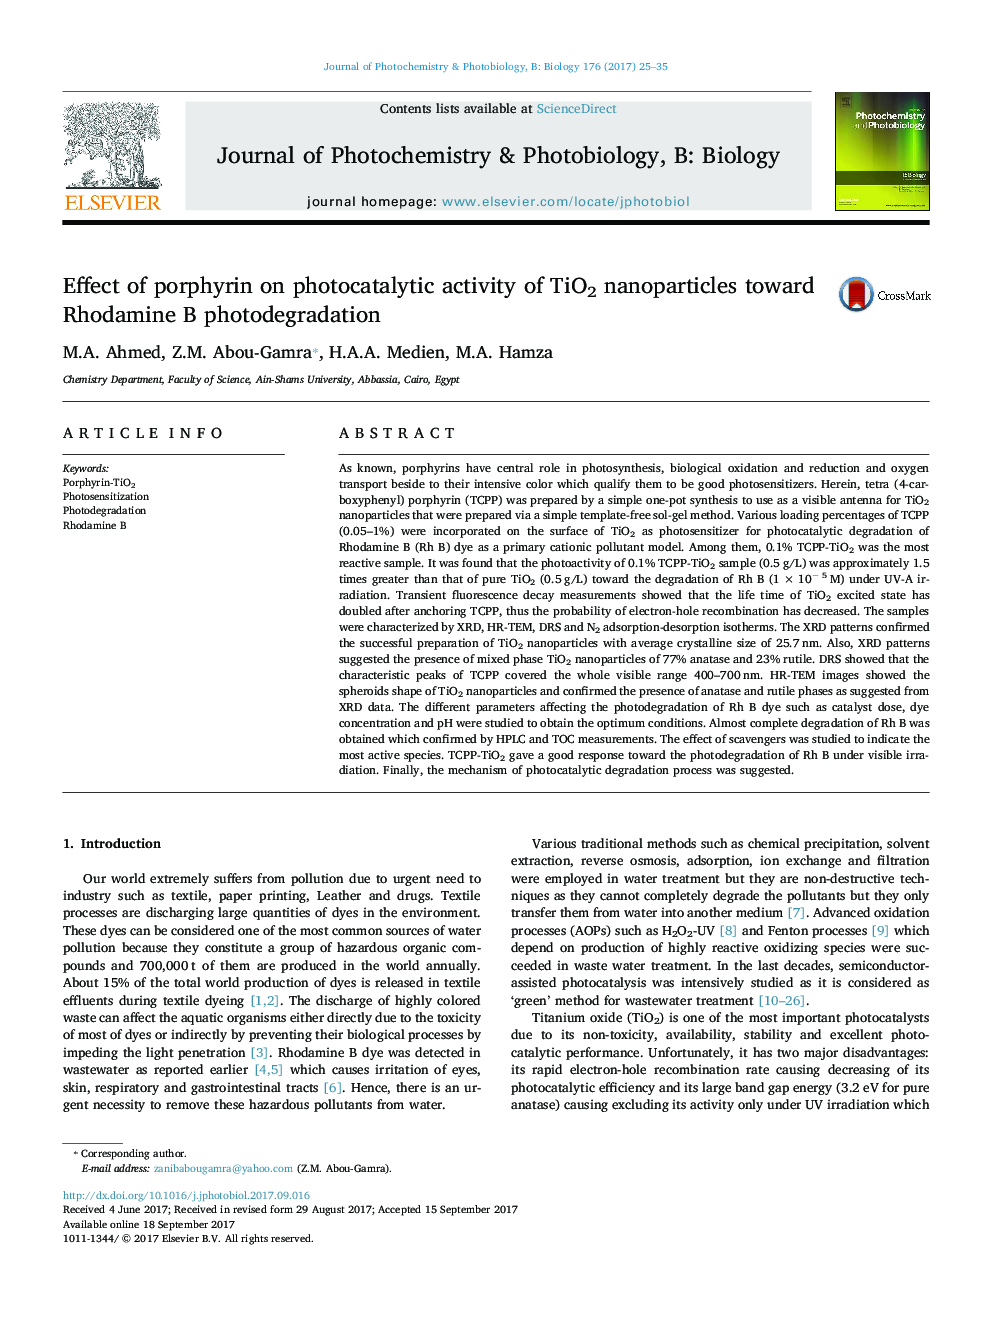 Effect of porphyrin on photocatalytic activity of TiO2 nanoparticles toward Rhodamine B photodegradation